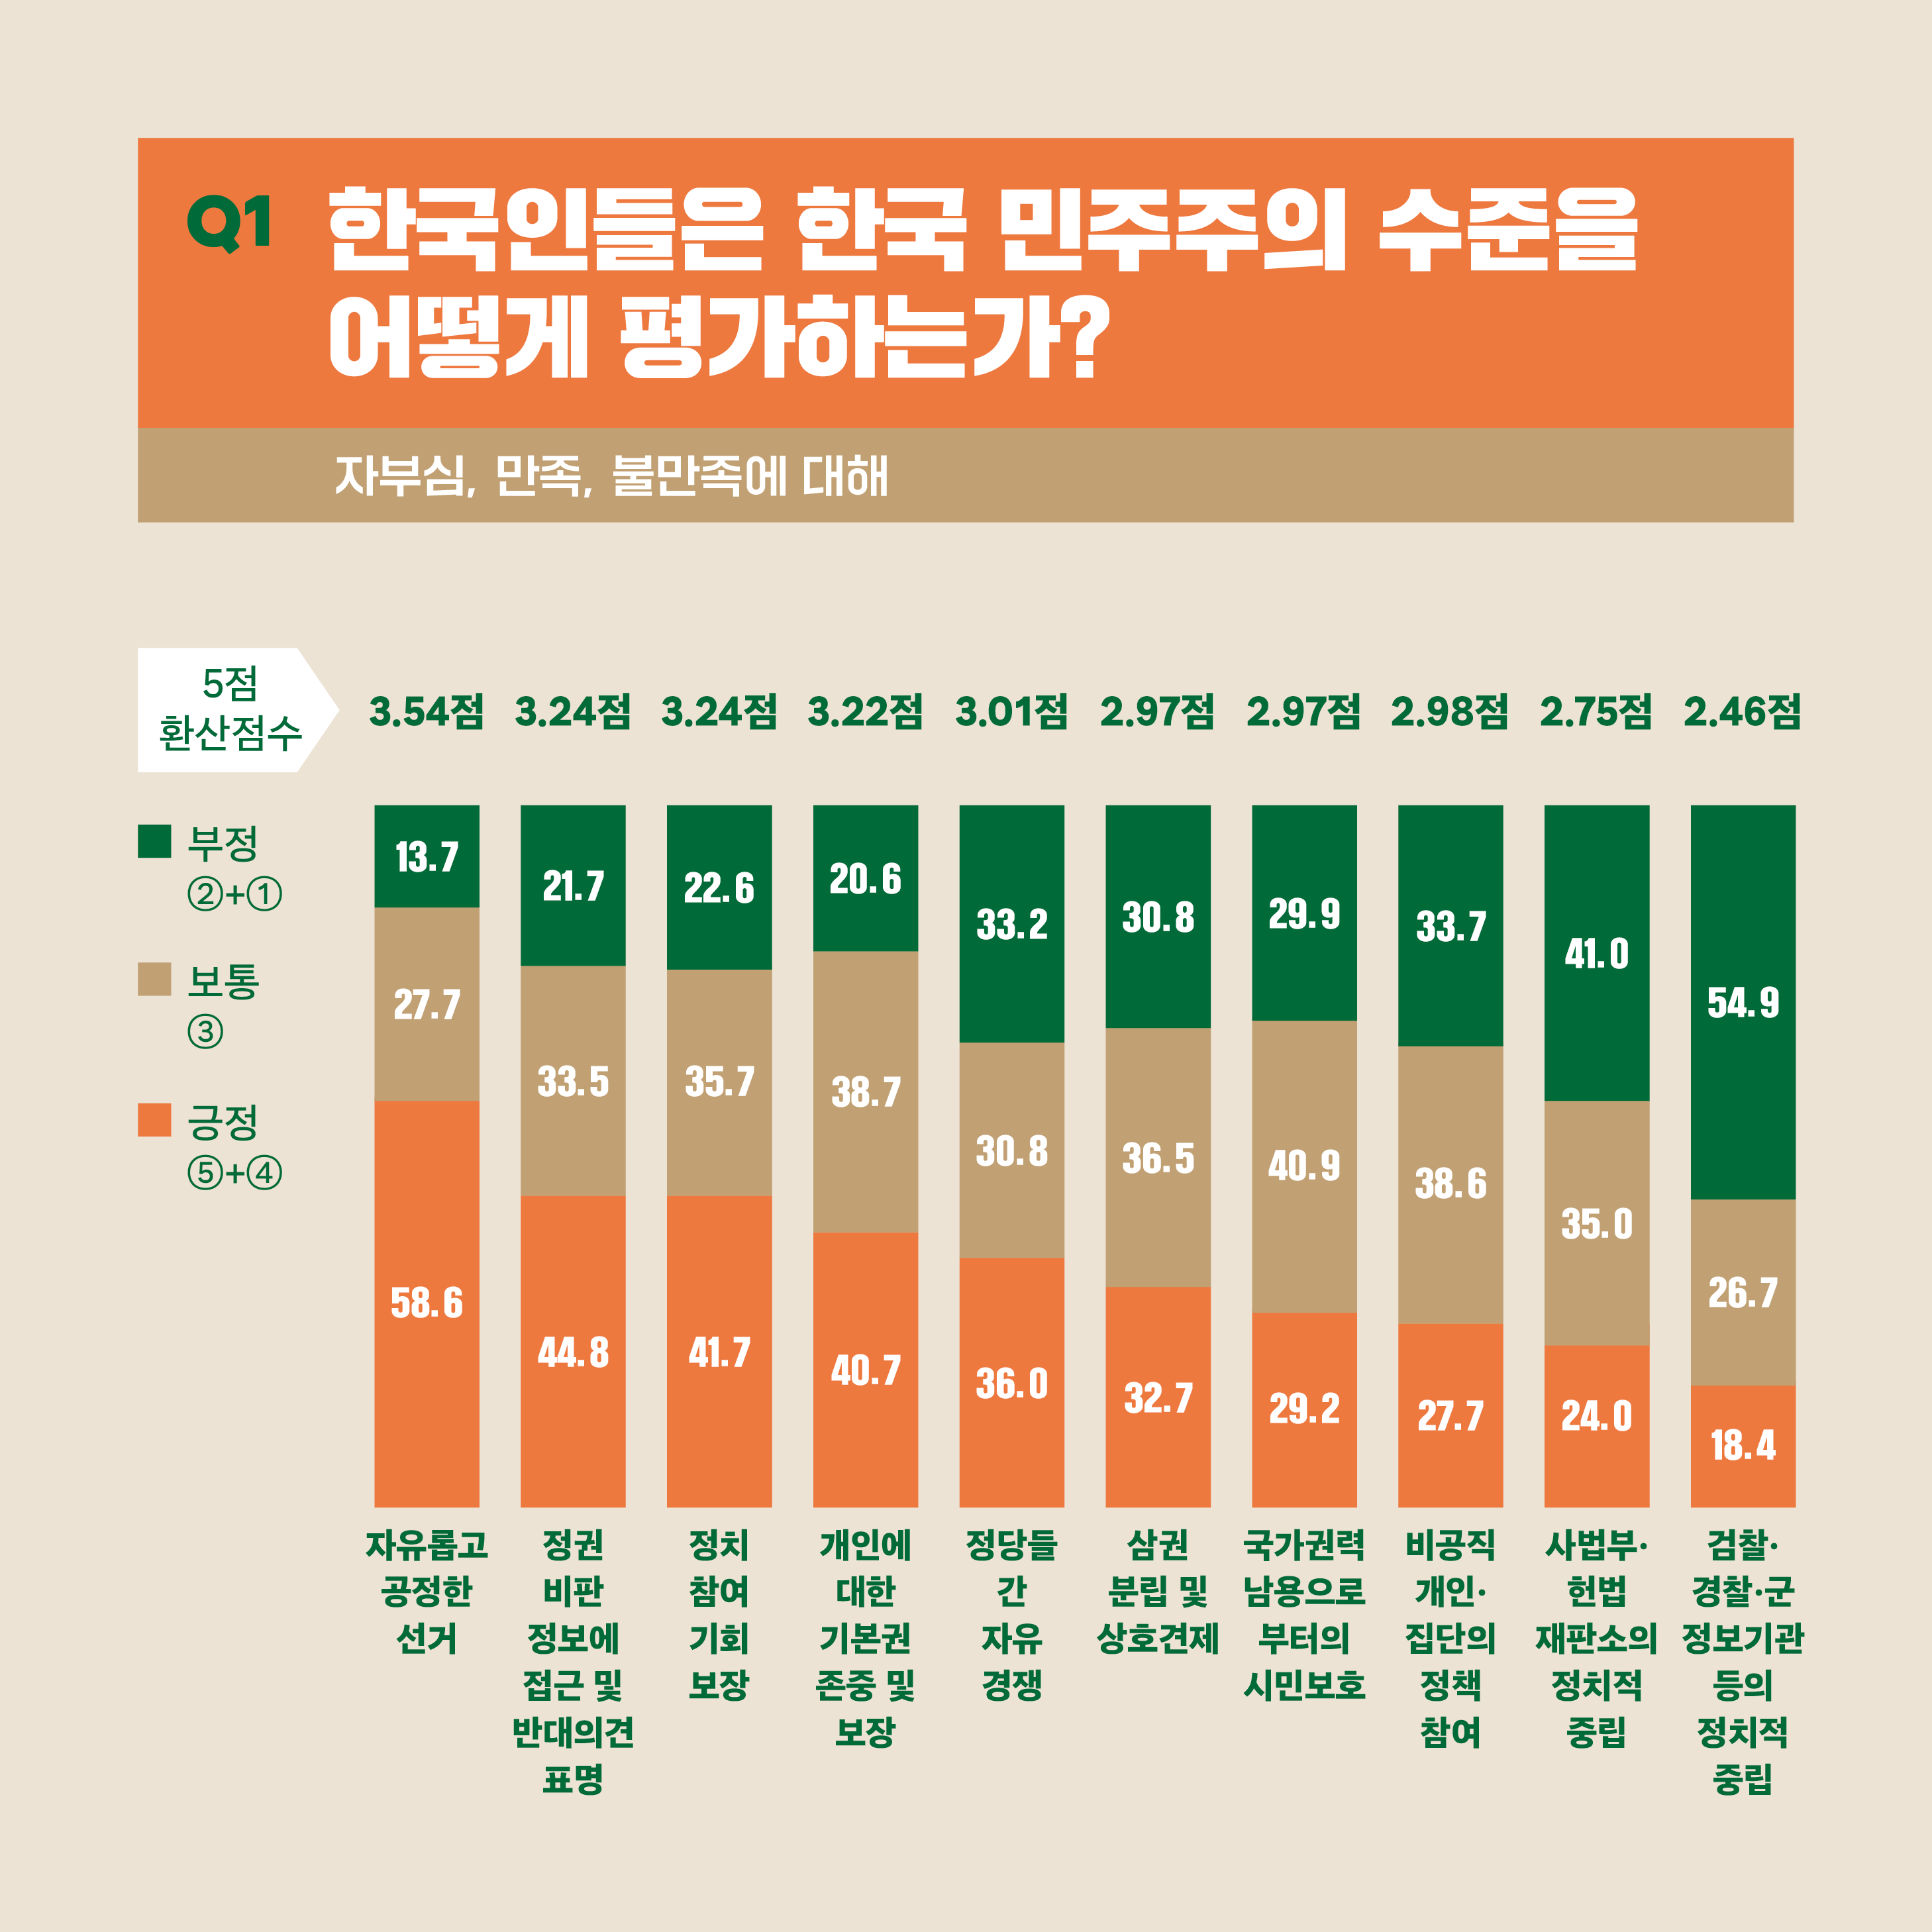 Q1. 한국인들은 한국 민주주의 수준을 어떻게 평가하는가? -자부심, 만족, 불만족에 대해